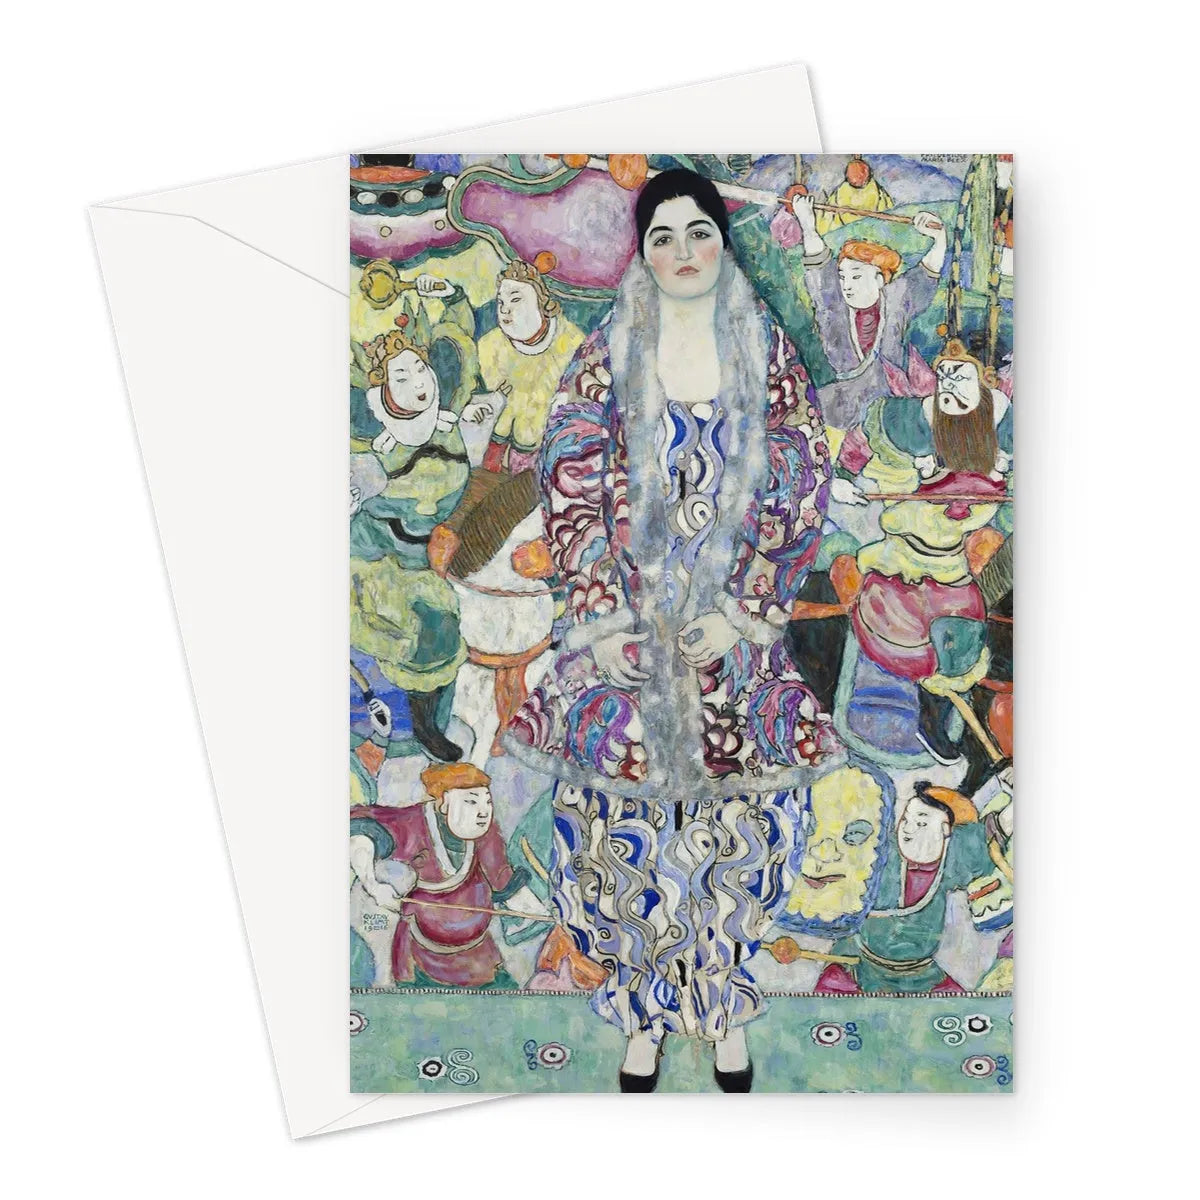 Friederike Maria Beer By Gustav Klimt Greeting Card - A5 Portrait / 1 Card - Greeting & Note Cards - Aesthetic Art